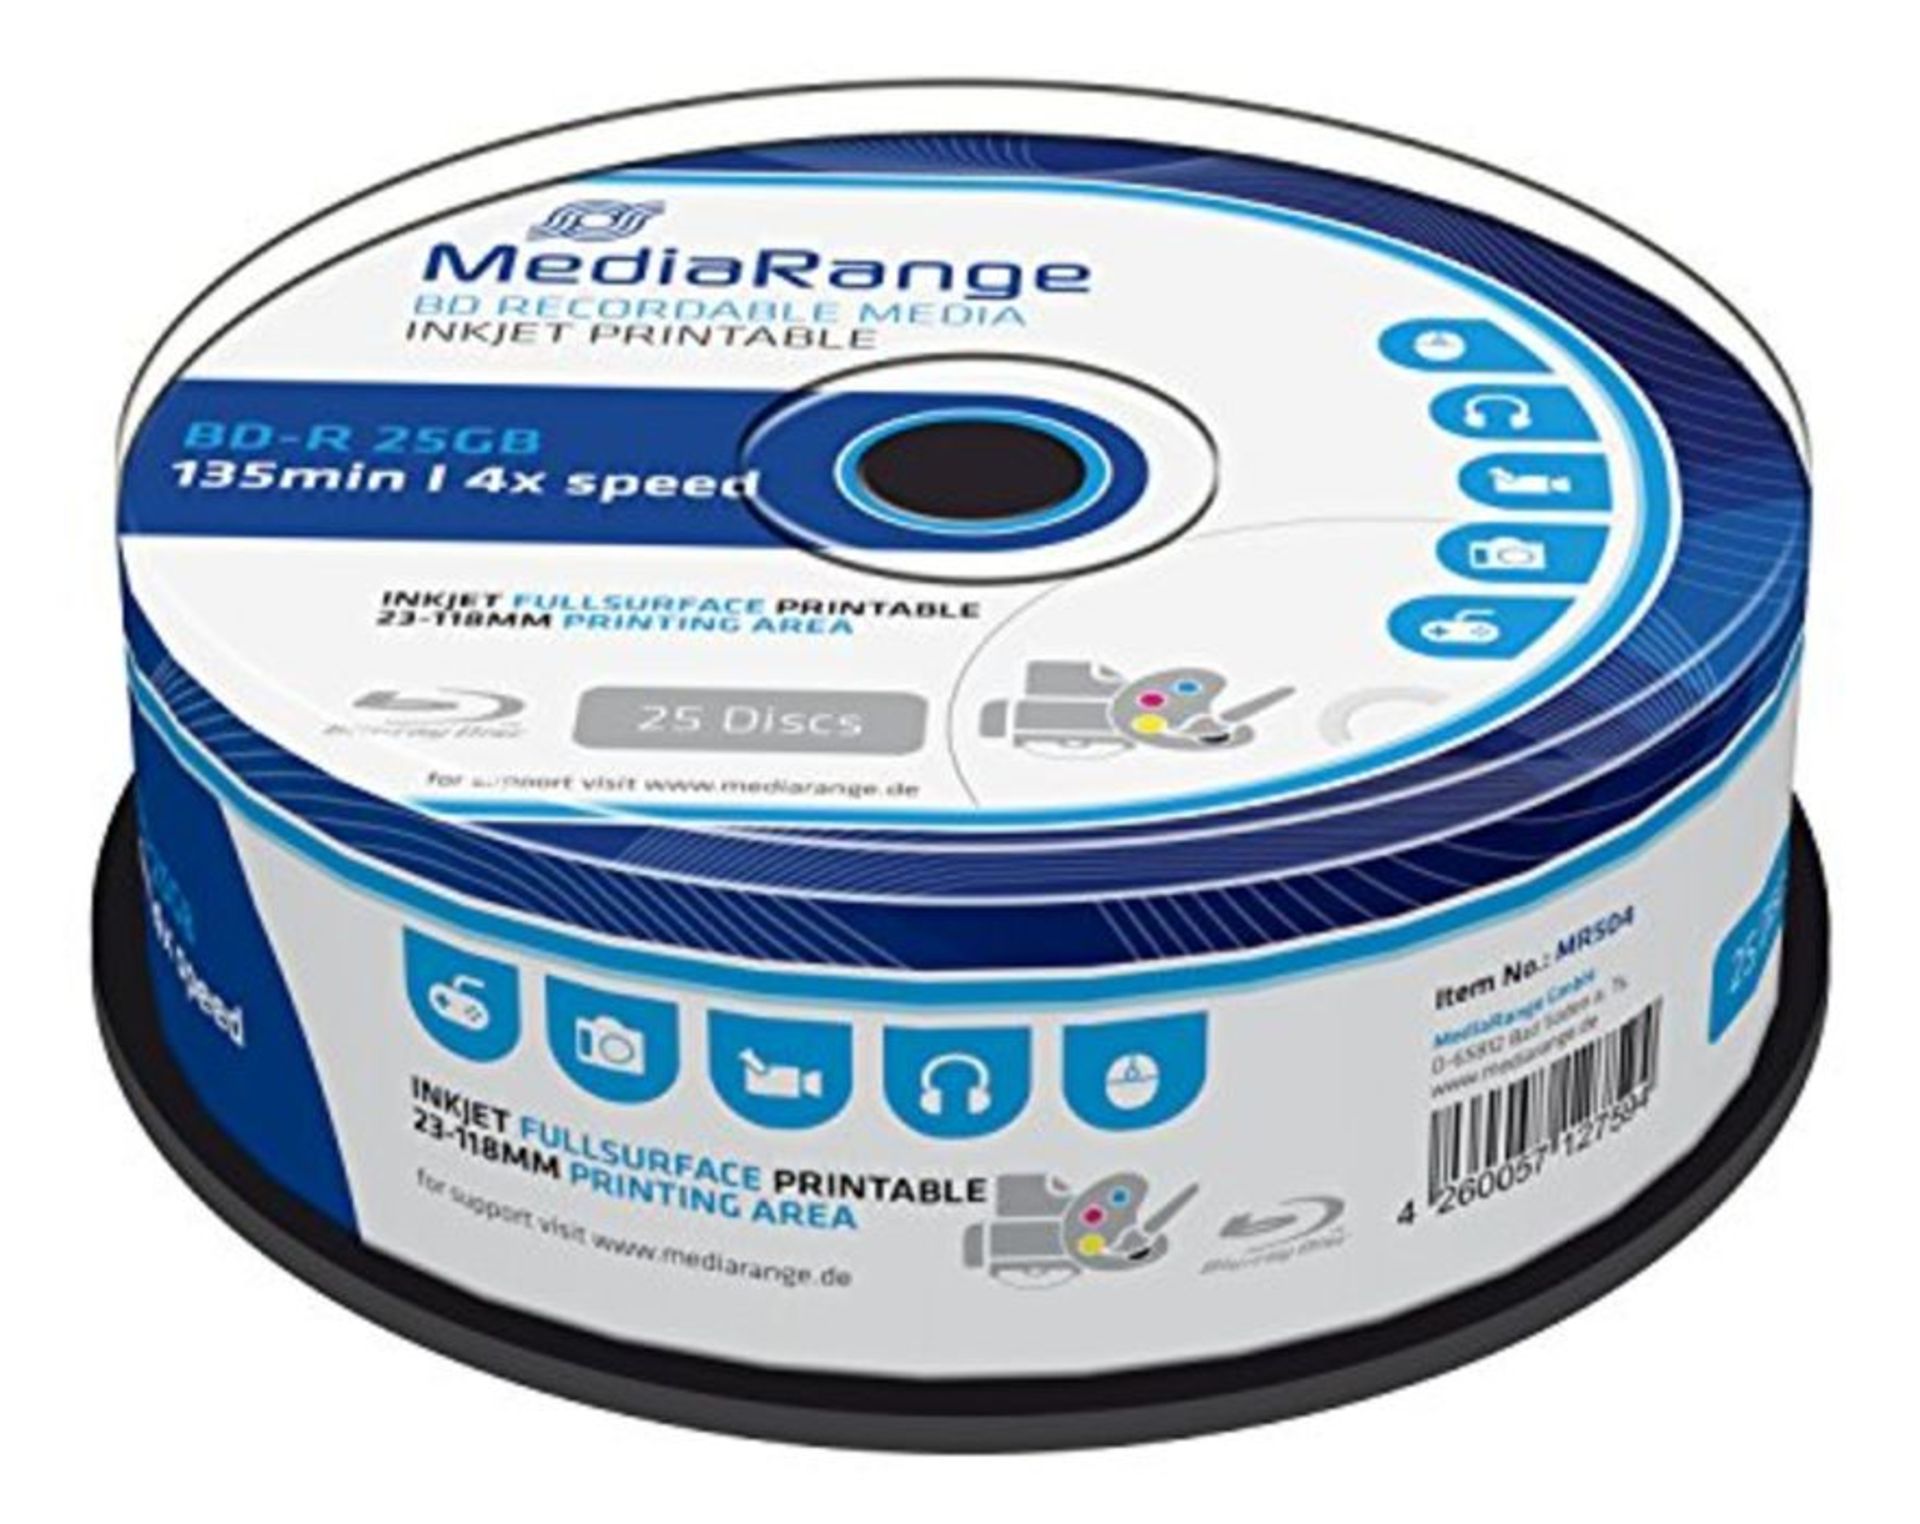 MediaRange MR504 BD-R Blu-ray Disc (25GB 4x Speed, bedruckbar, 25 Stück)